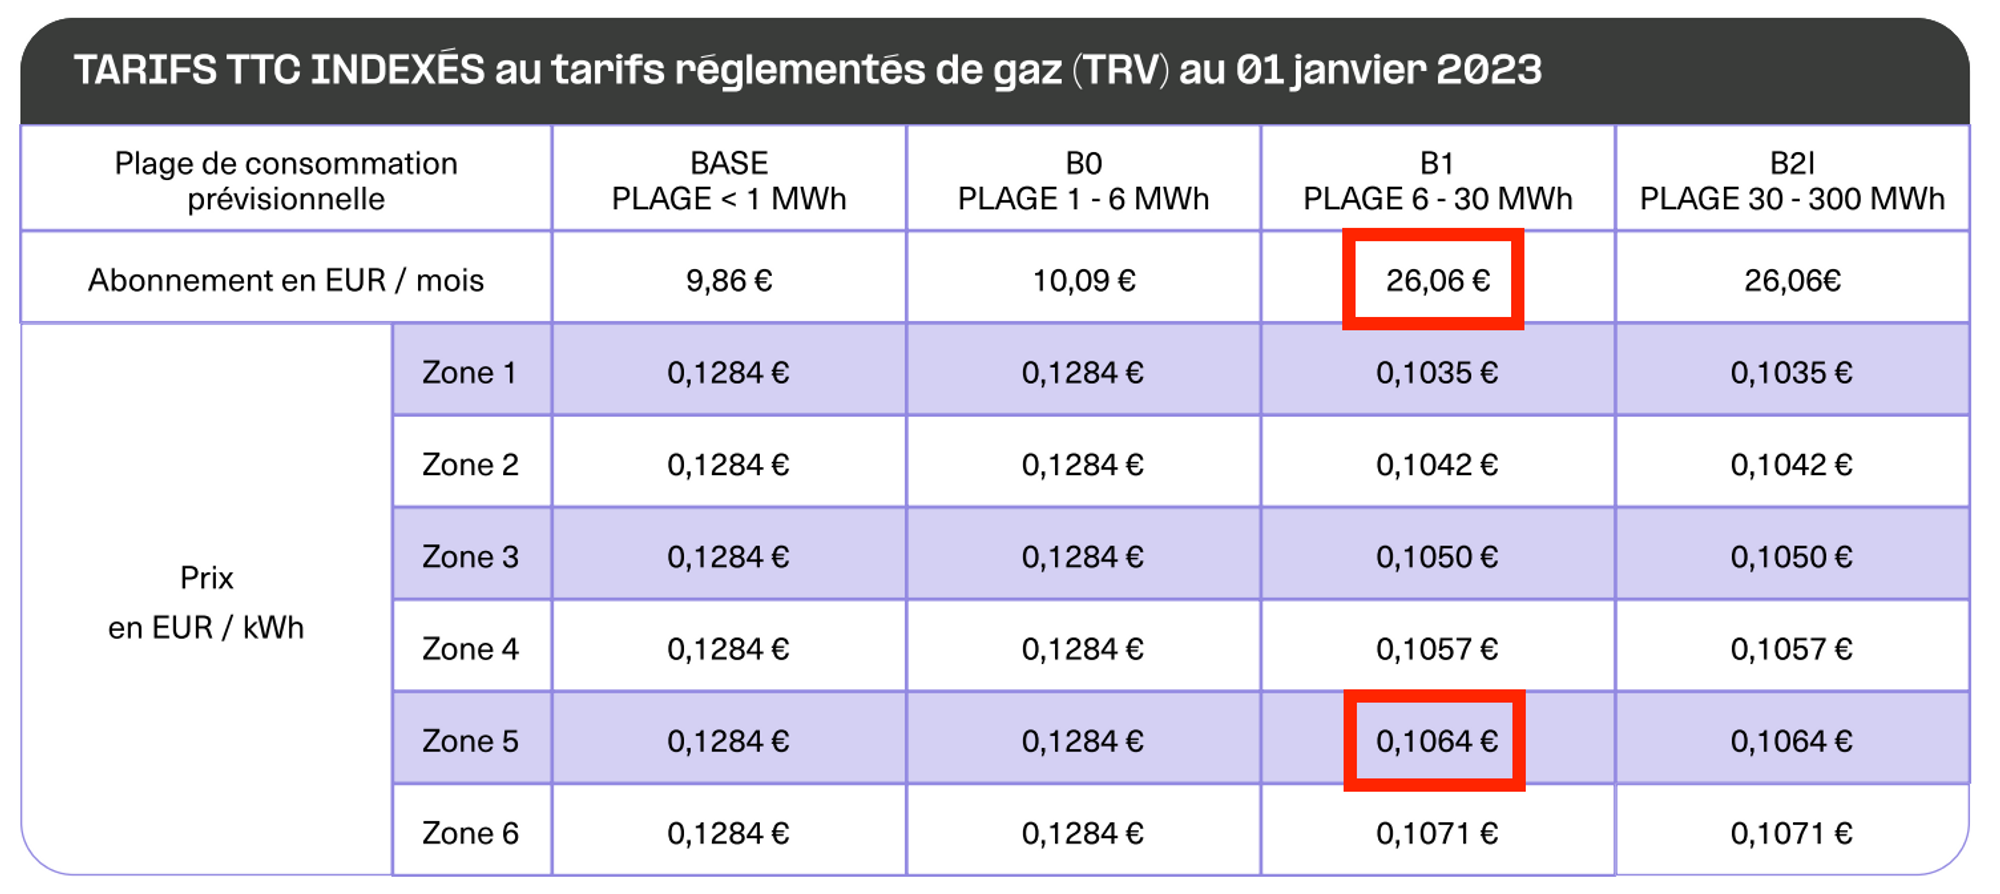 Tarifs TTC indexés au TRV au 1 janvier 2023